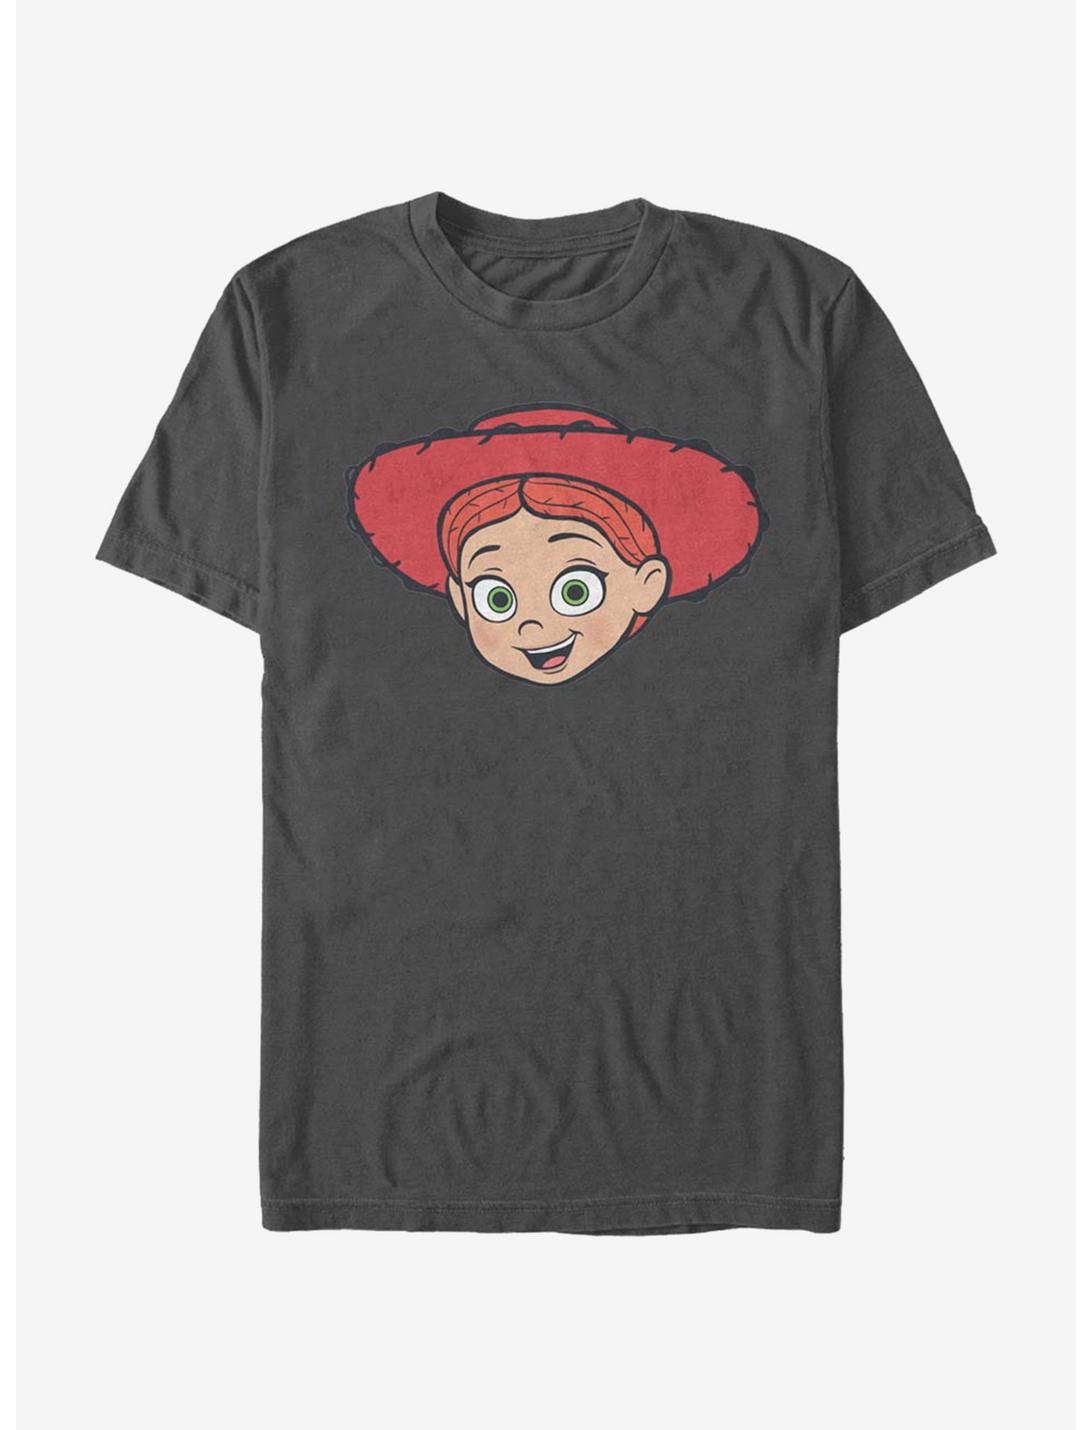 Disney Pixar Toy Story 4 Big Face Jessie T-Shirt, CHARCOAL, hi-res